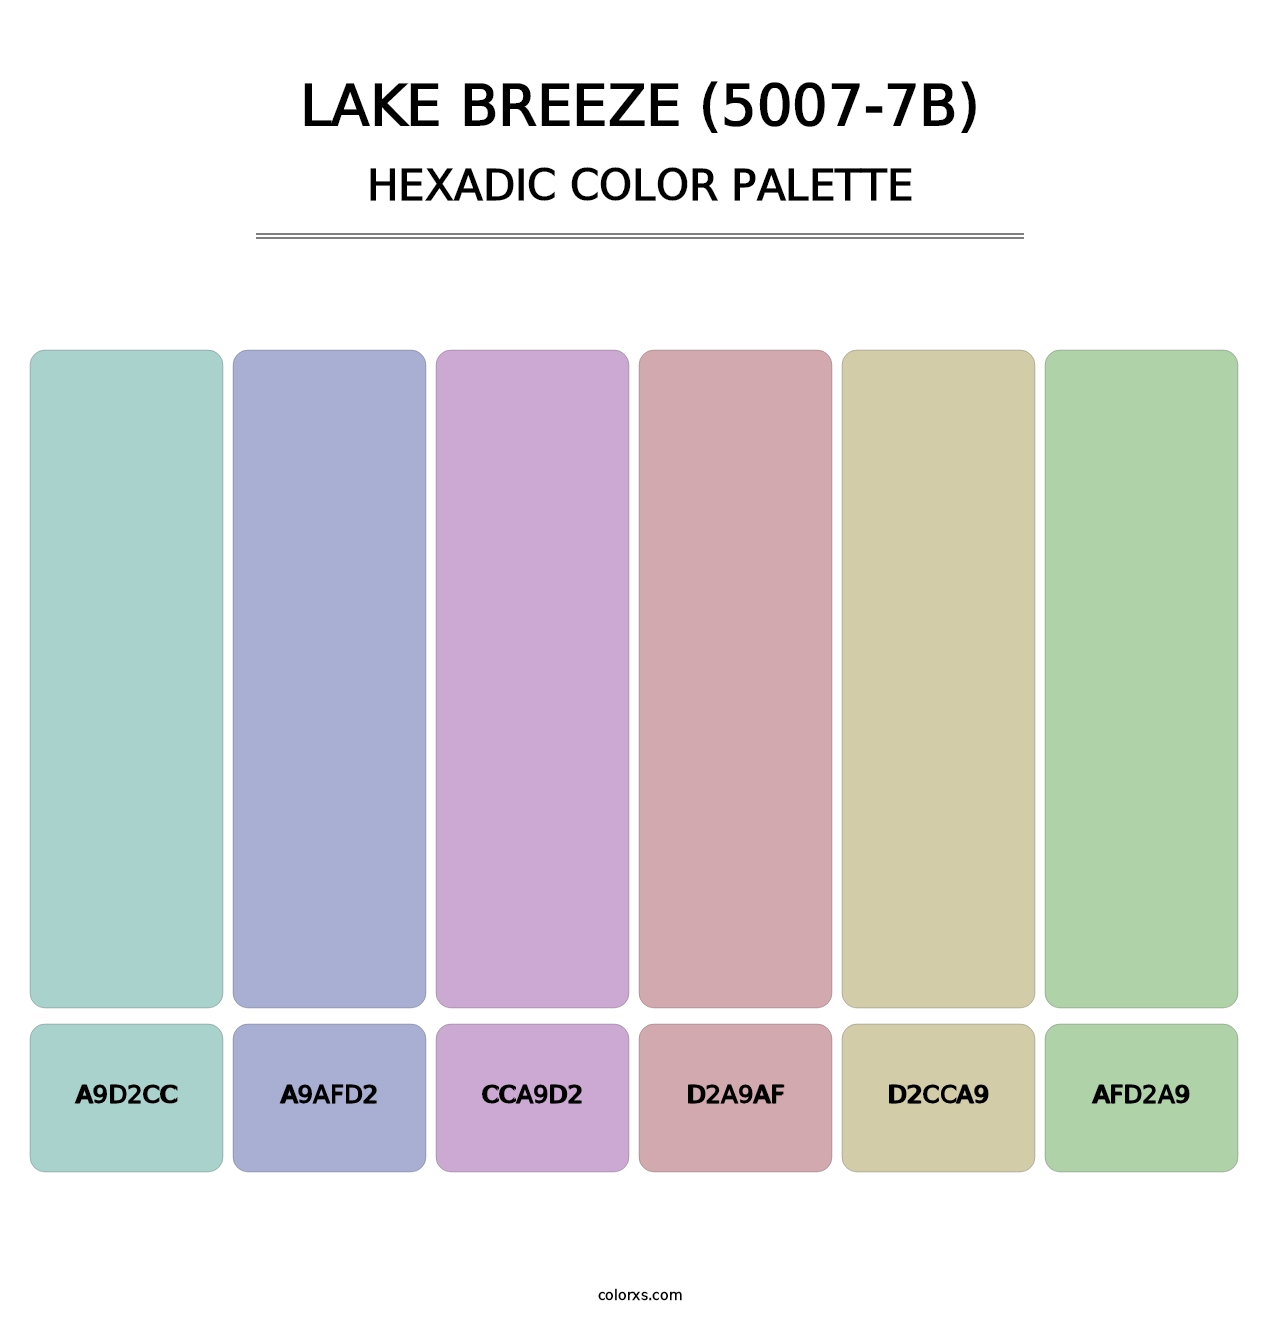 Lake Breeze (5007-7B) - Hexadic Color Palette